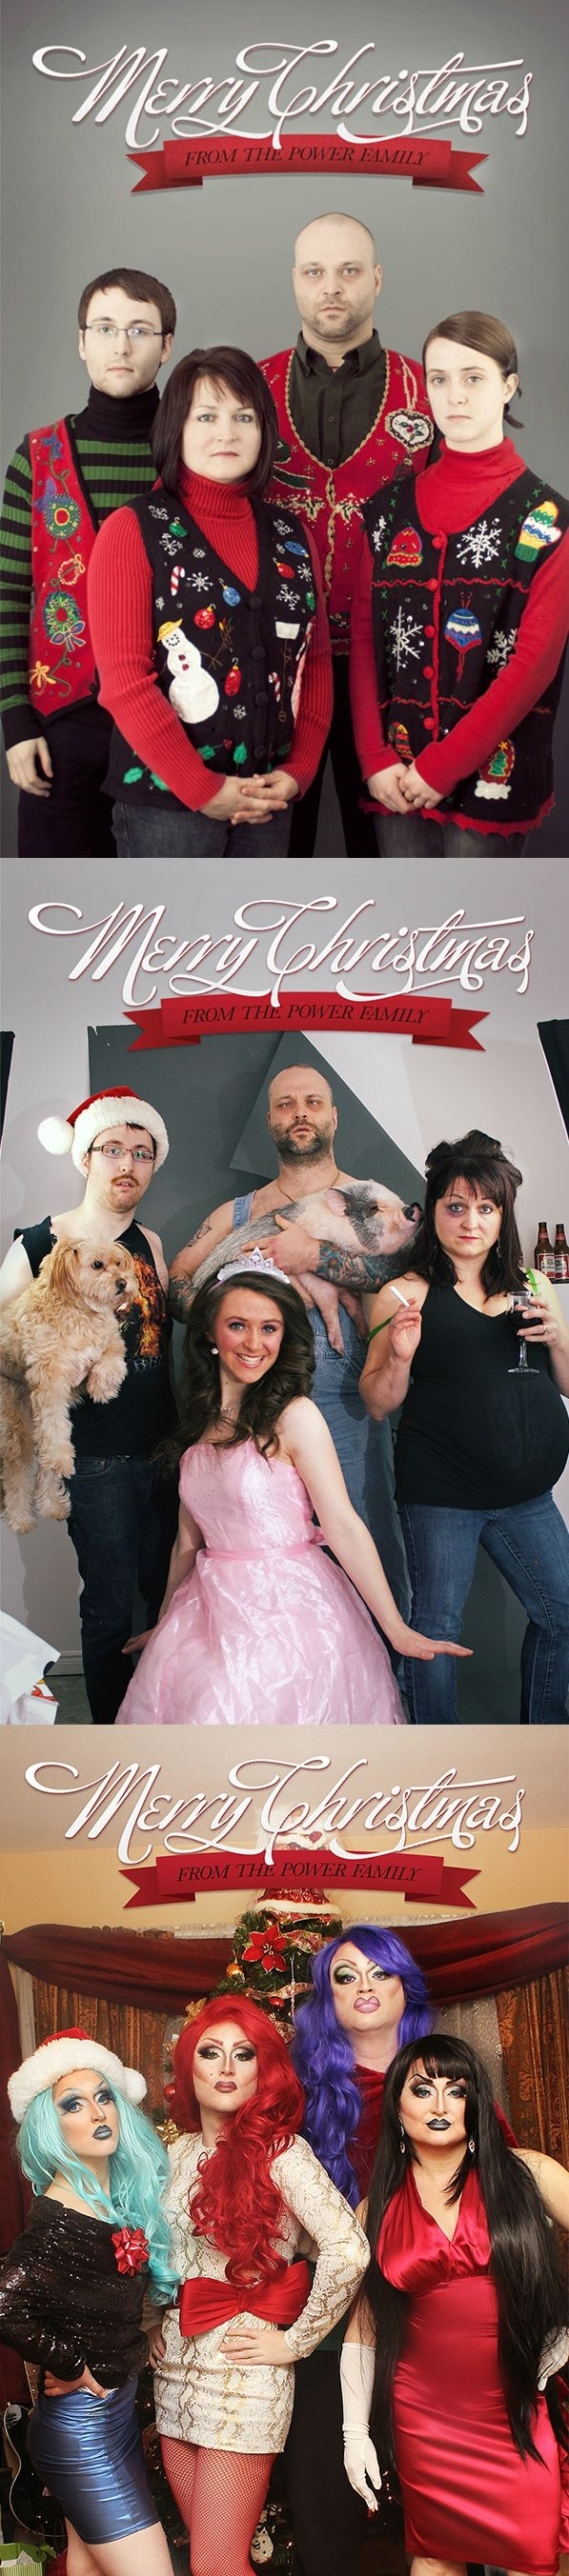 Three Years of Christmas Family Photos